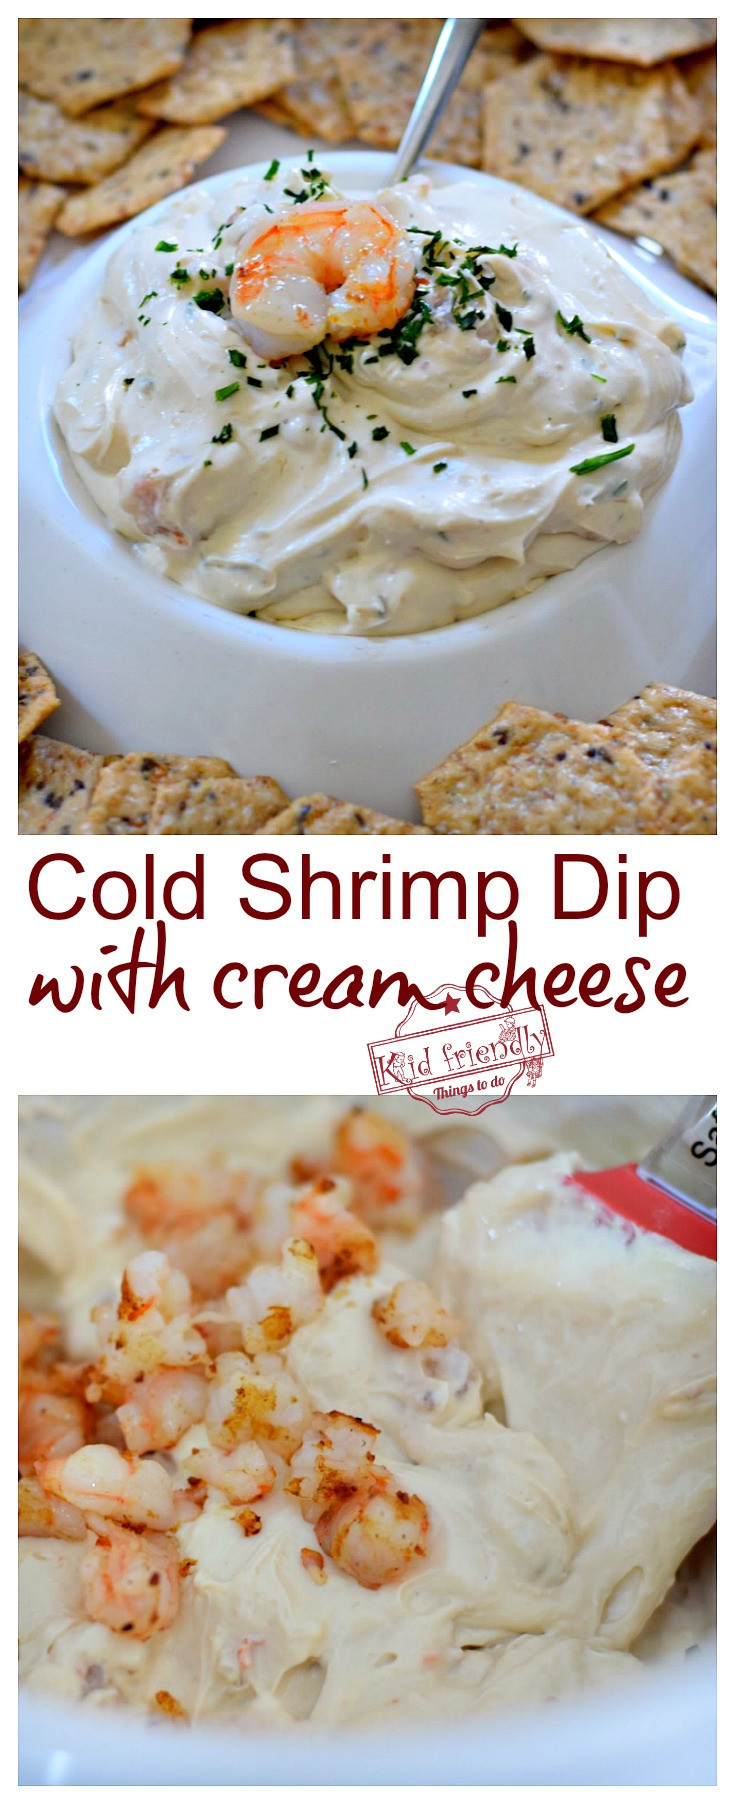 Cream Cheese Shrimp Appetizer
 The Best Cold Shrimp Dip Recipe With Cream Cheese